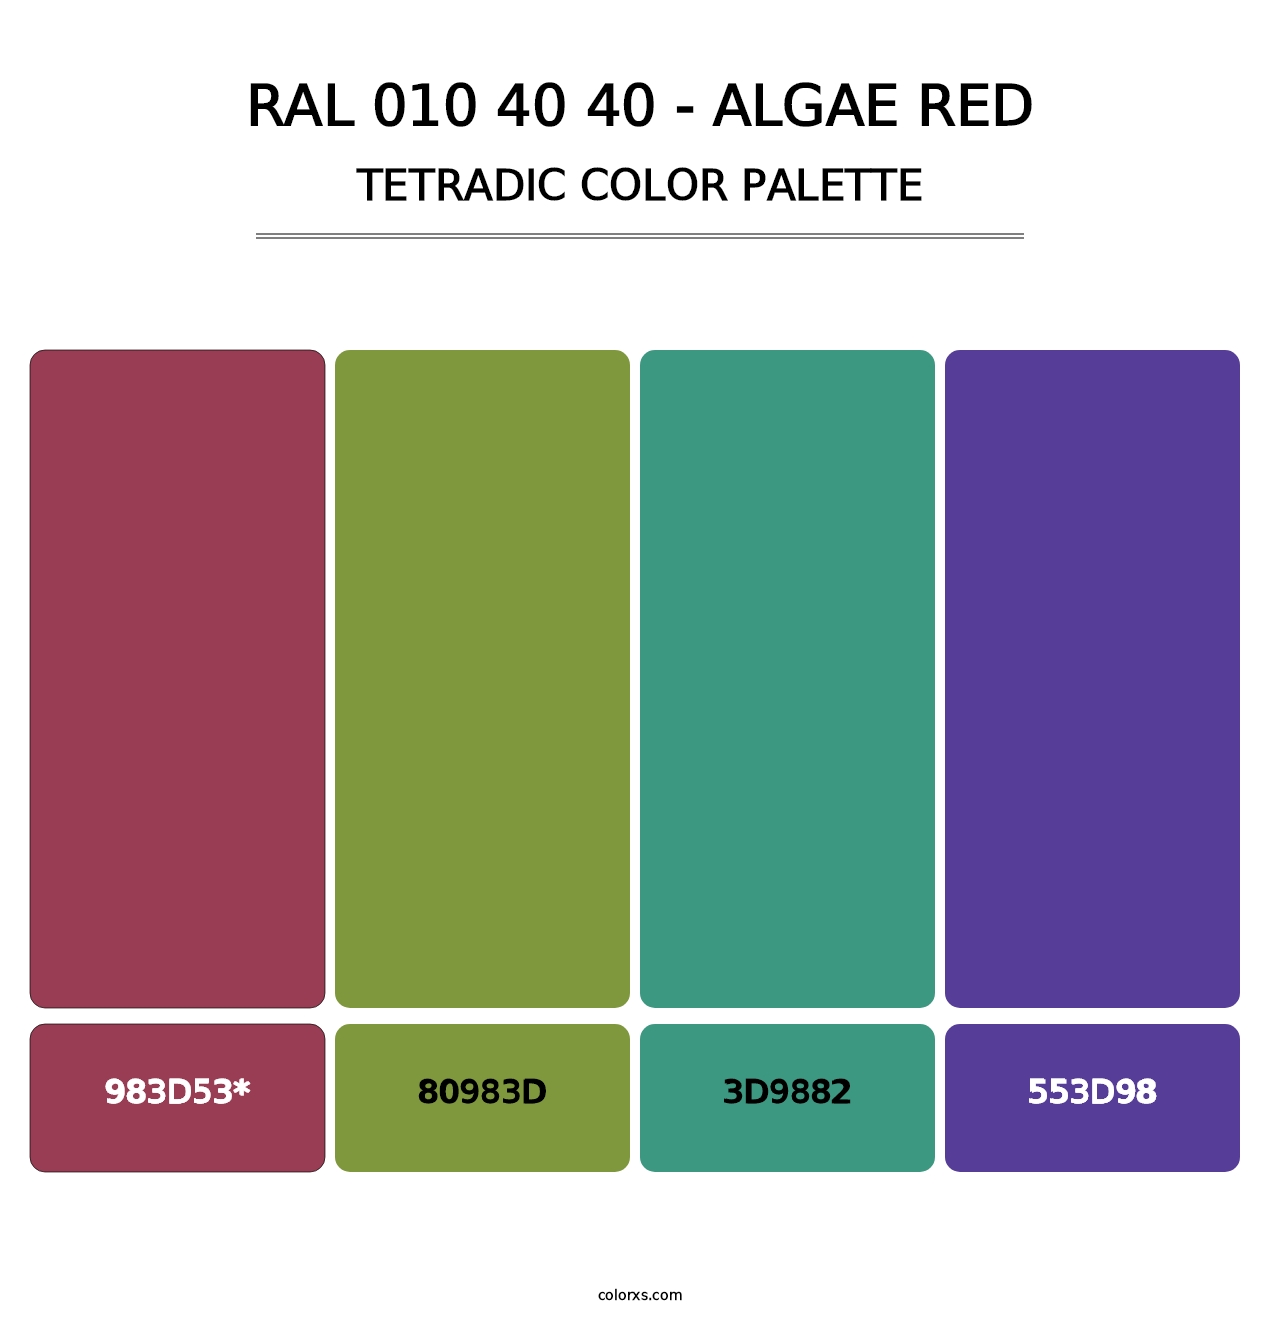 RAL 010 40 40 - Algae Red - Tetradic Color Palette